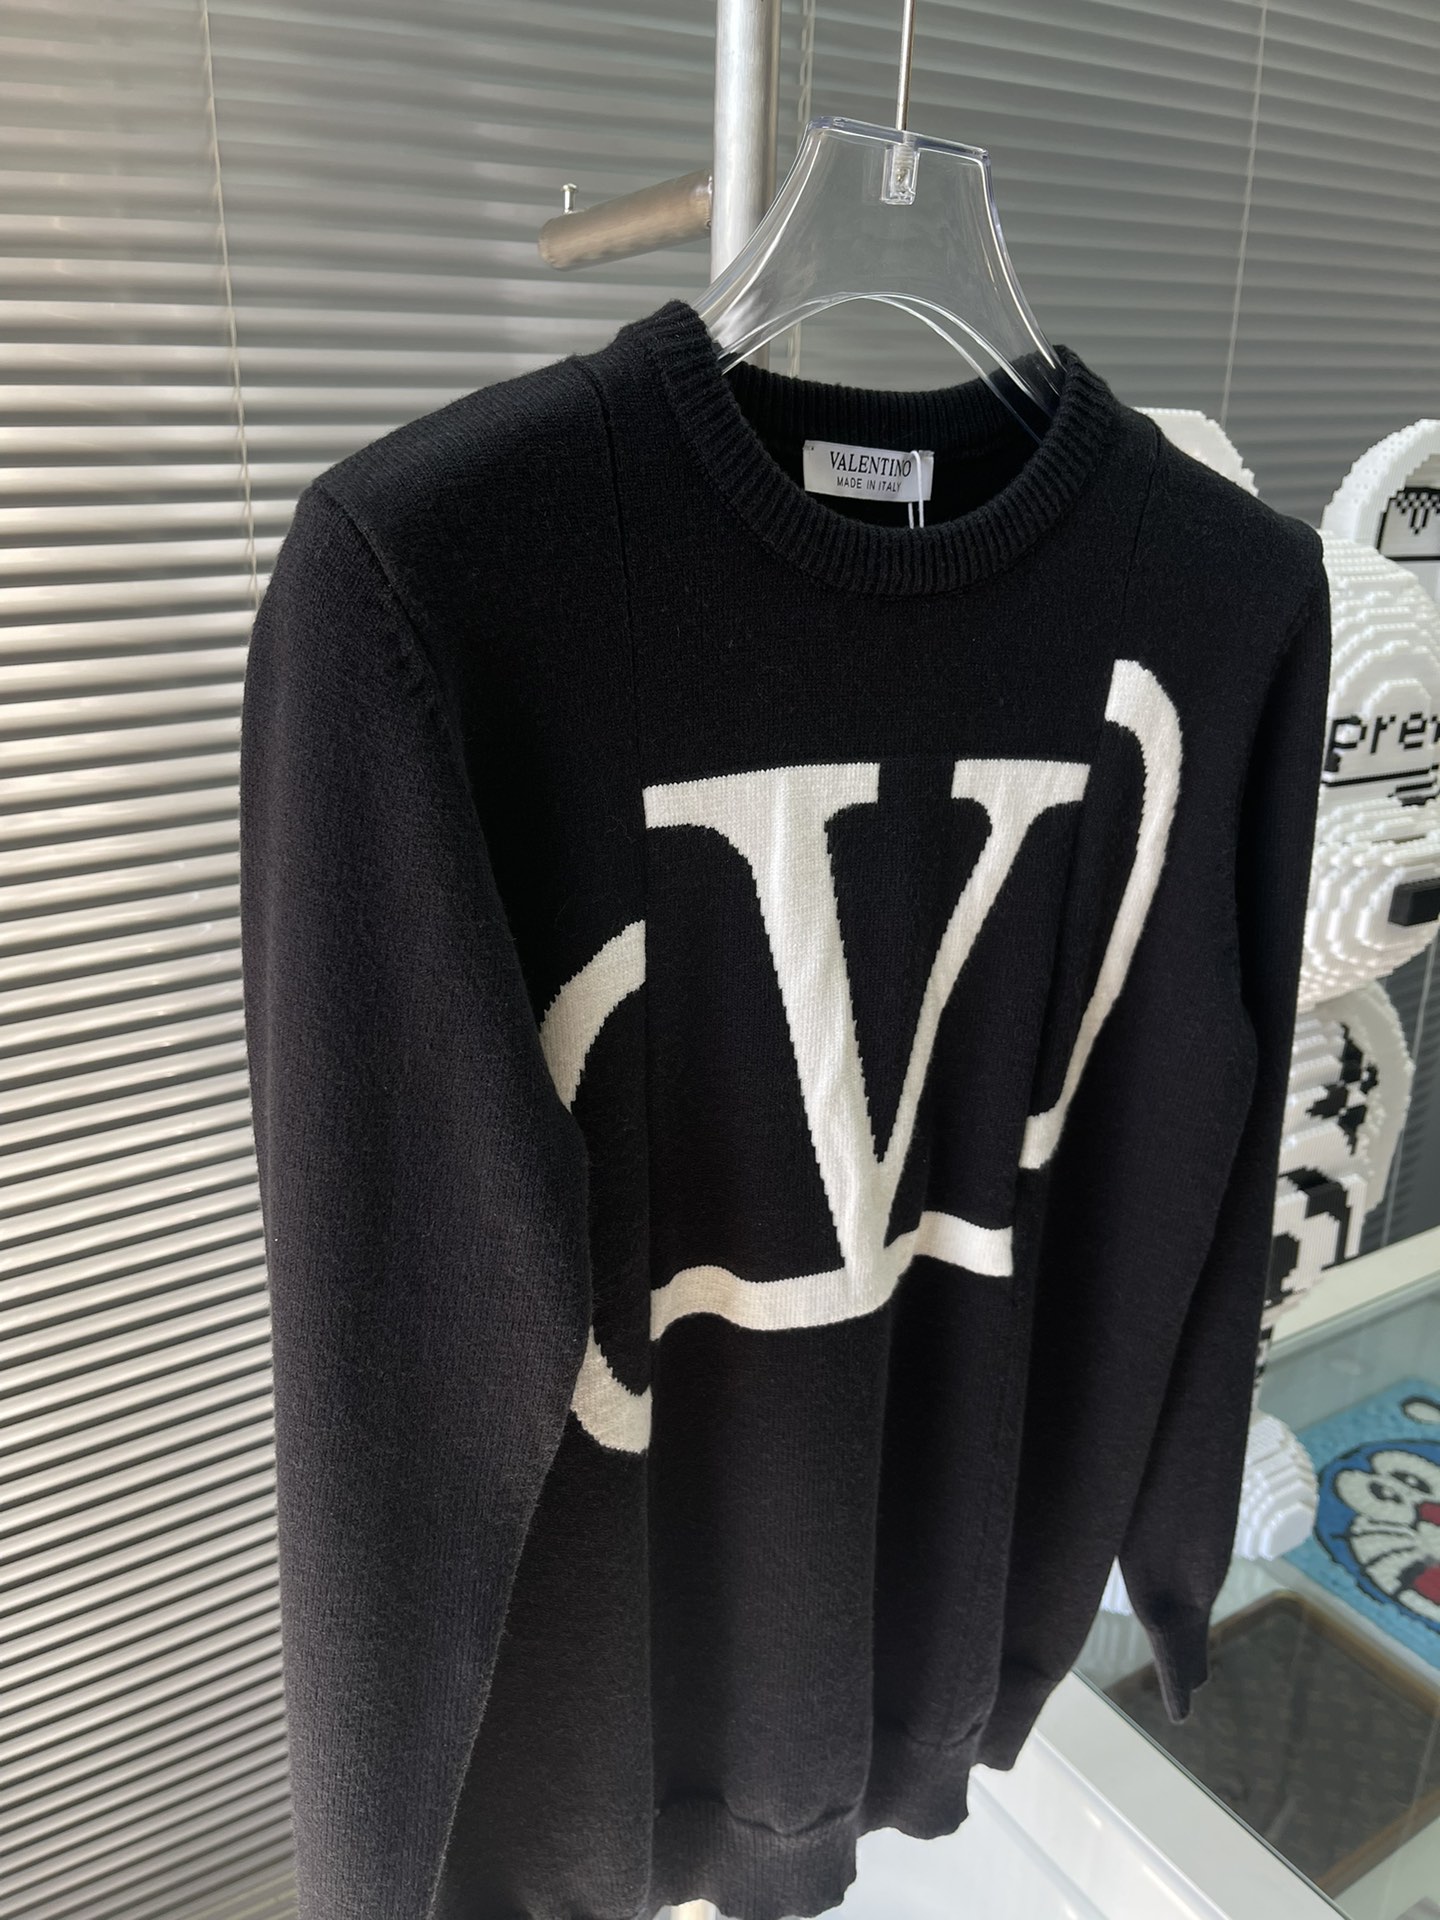 valentino メンズ ヴァレンティノ セーター偽物 HOT品質保証 トップス セーター 柔らかい 保温 暖かい ブラック_6